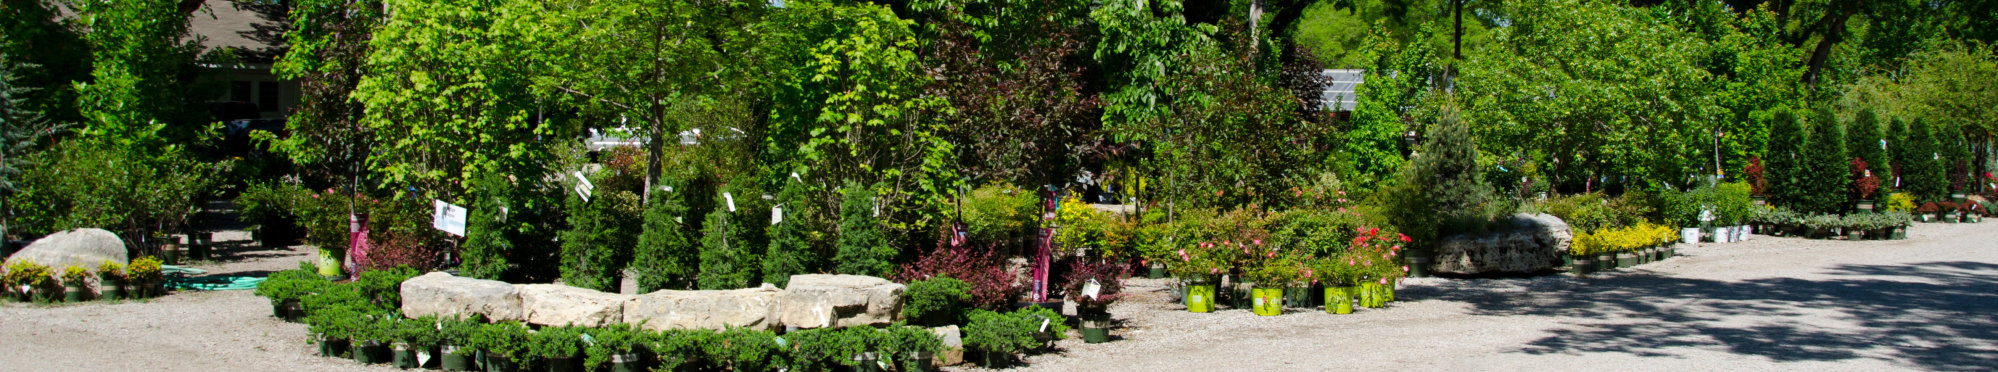 landscaping products - Landscaping - Hillside Nursery Garden Center